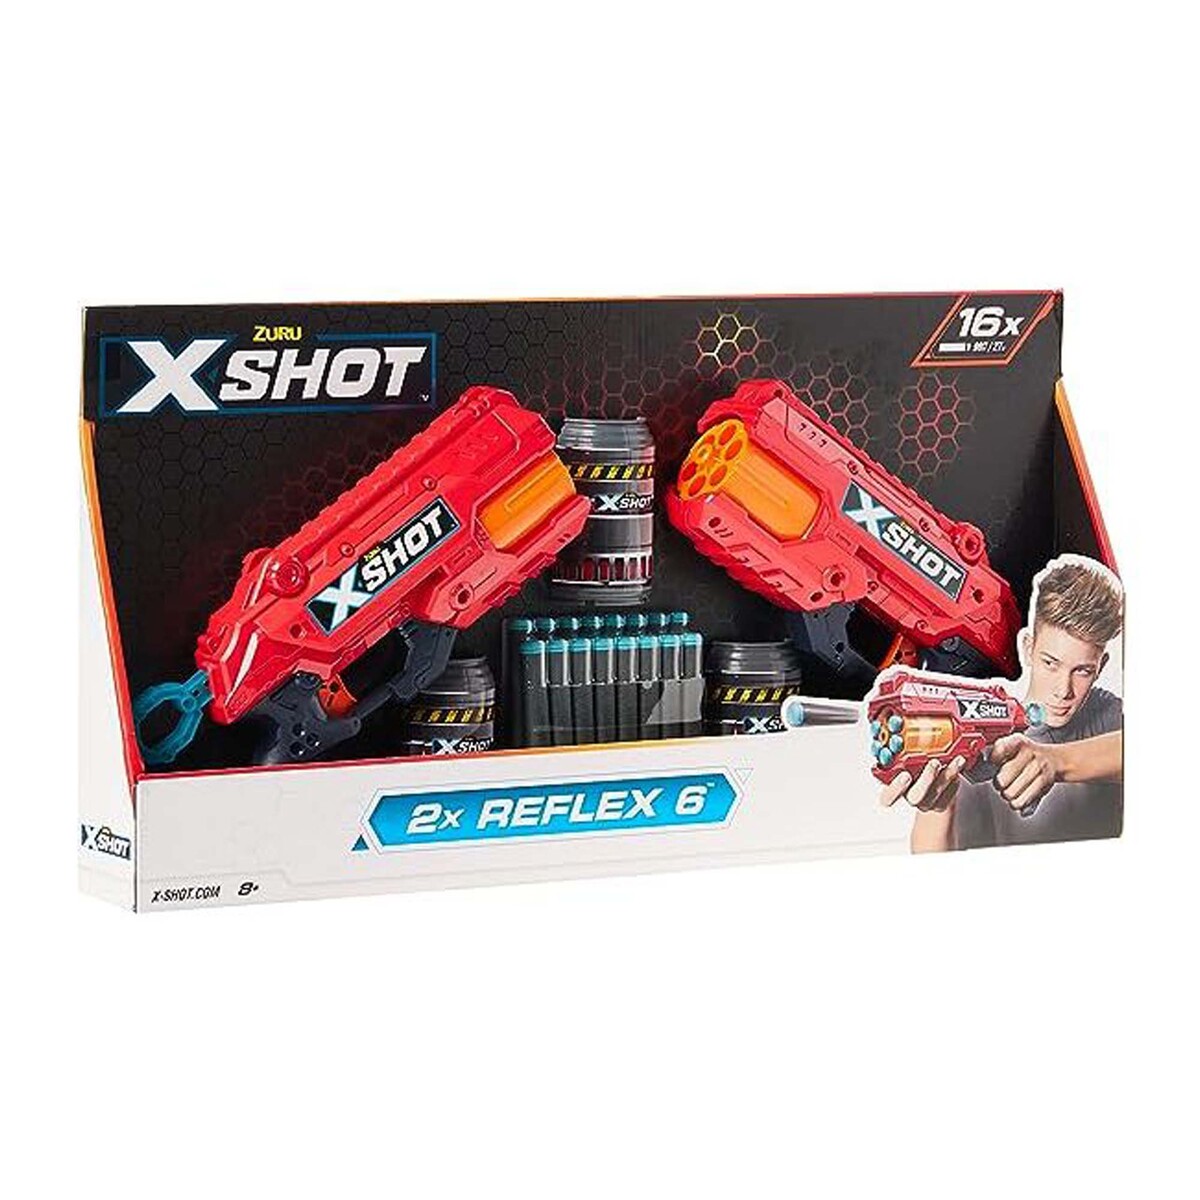 Zuru XShot Reflex 6 Blaster, XS-36434-A